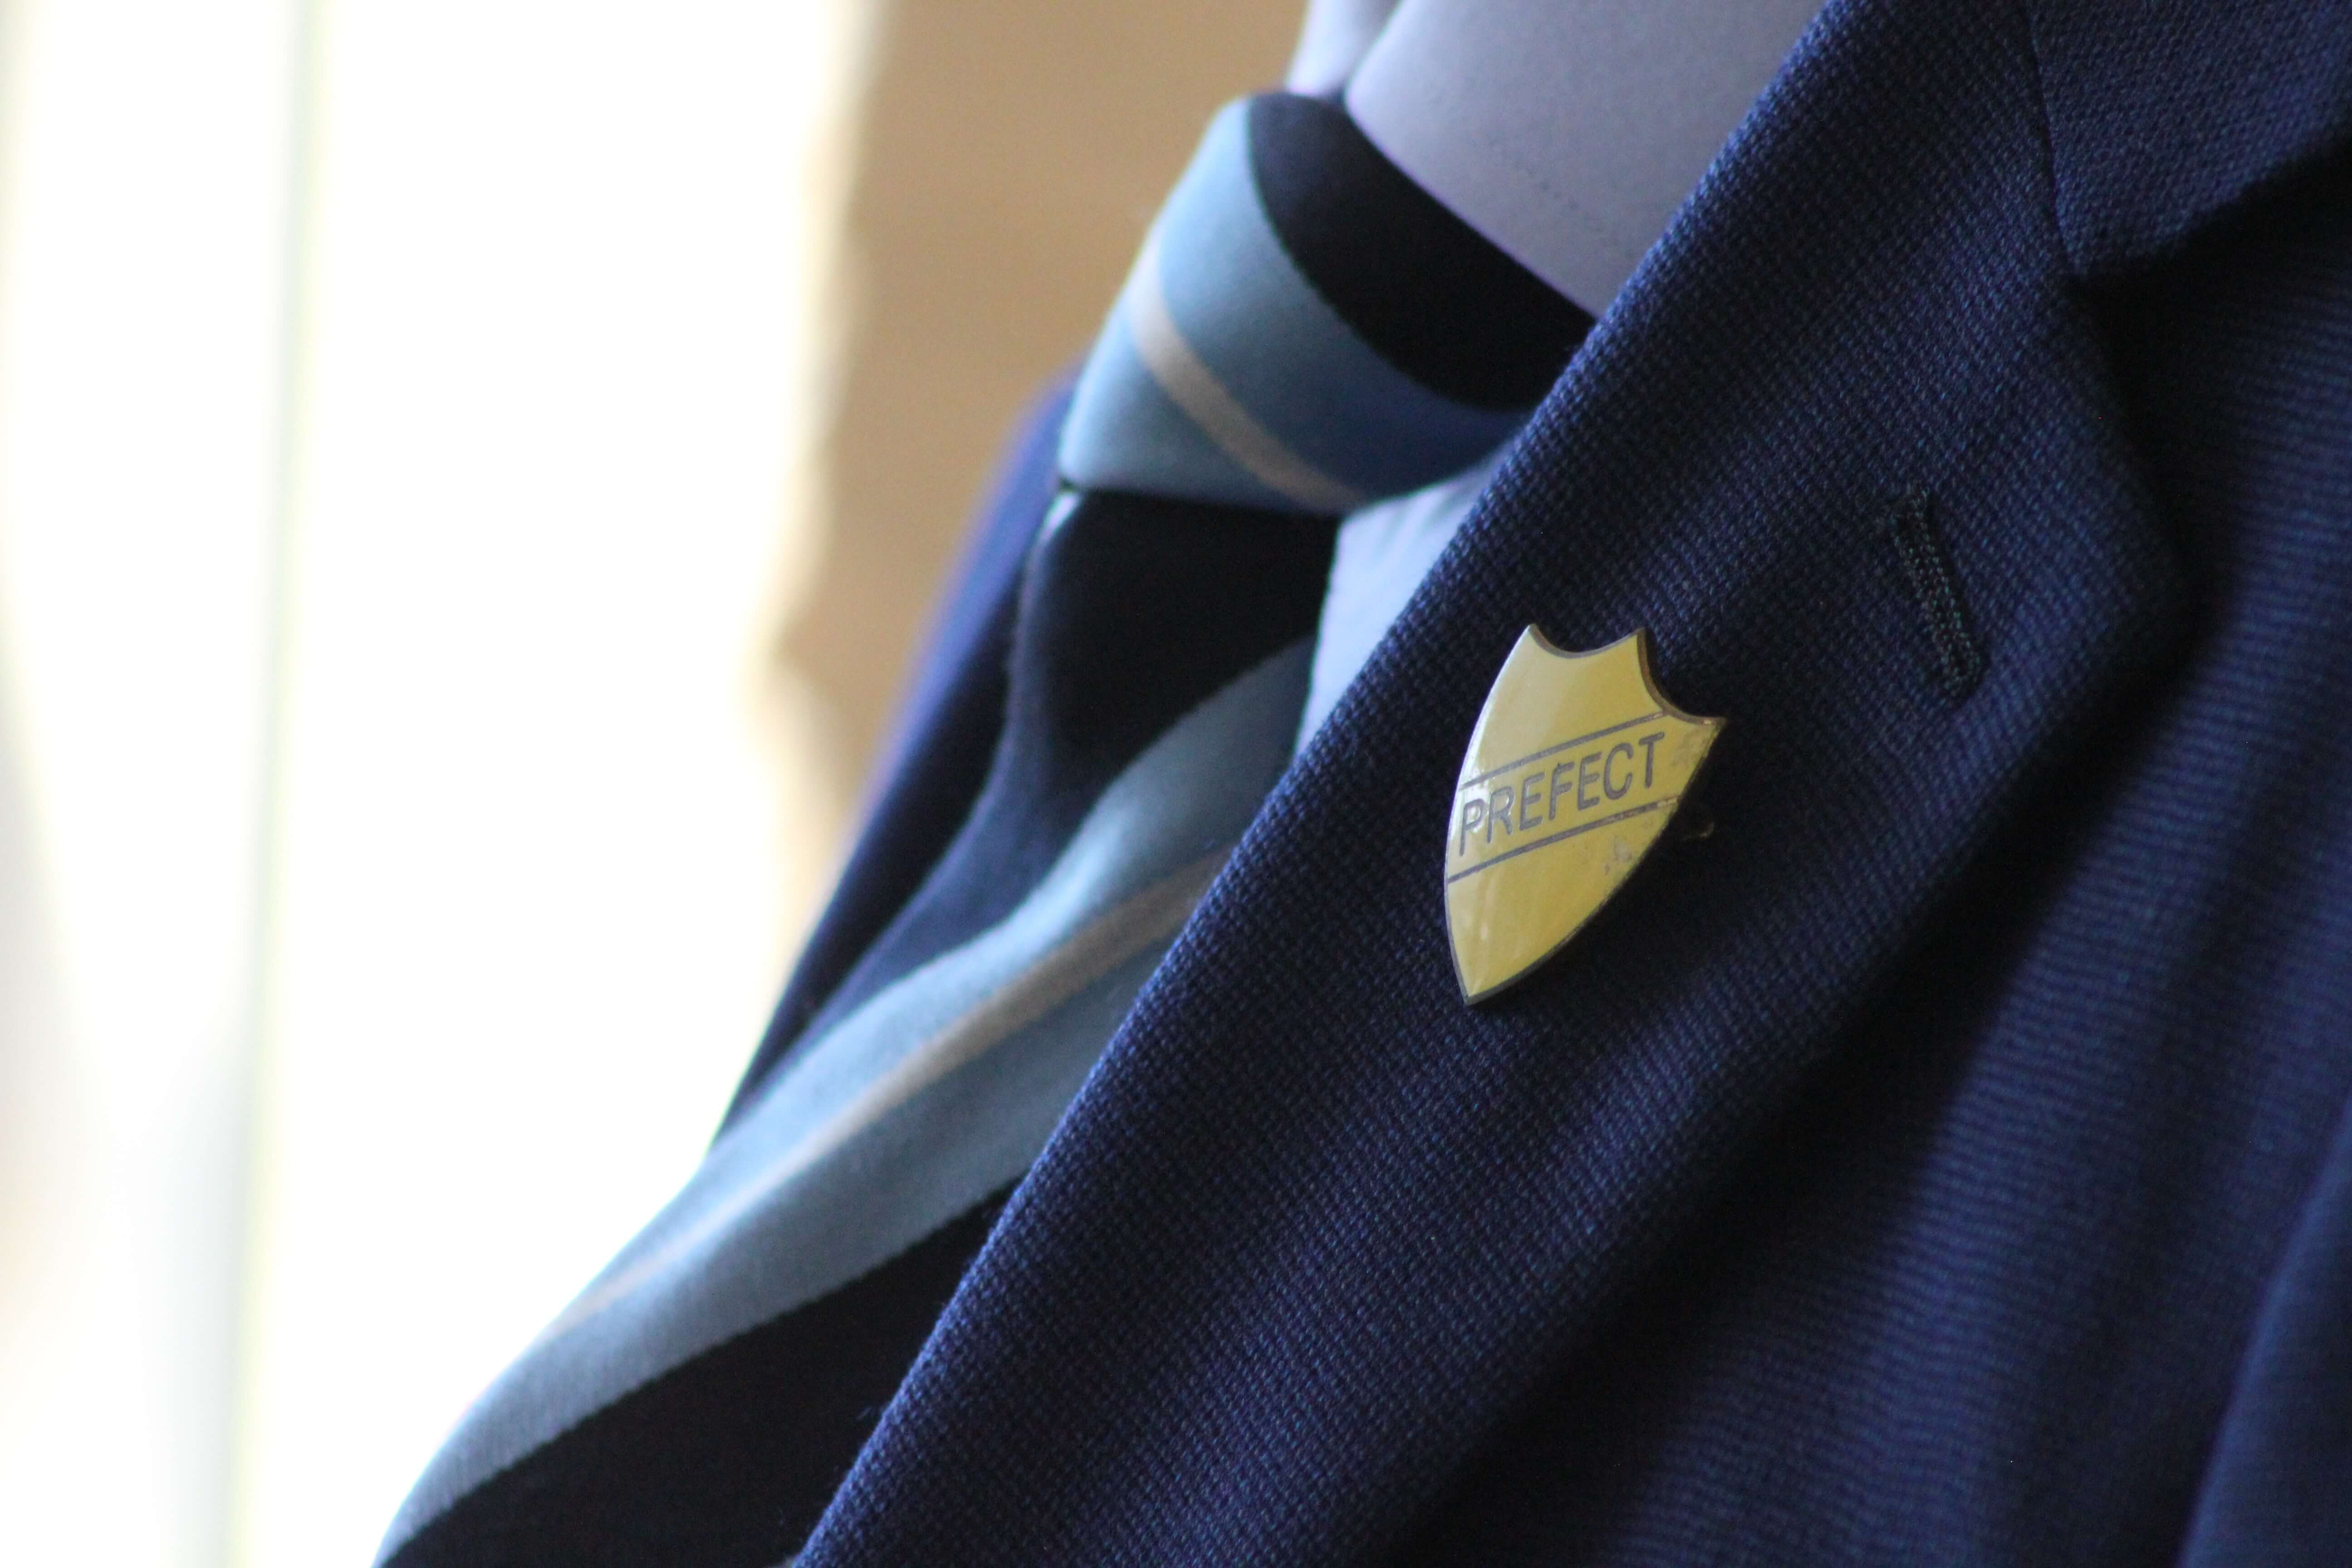 Photo of school uniform by Robin Worrall for Unsplash